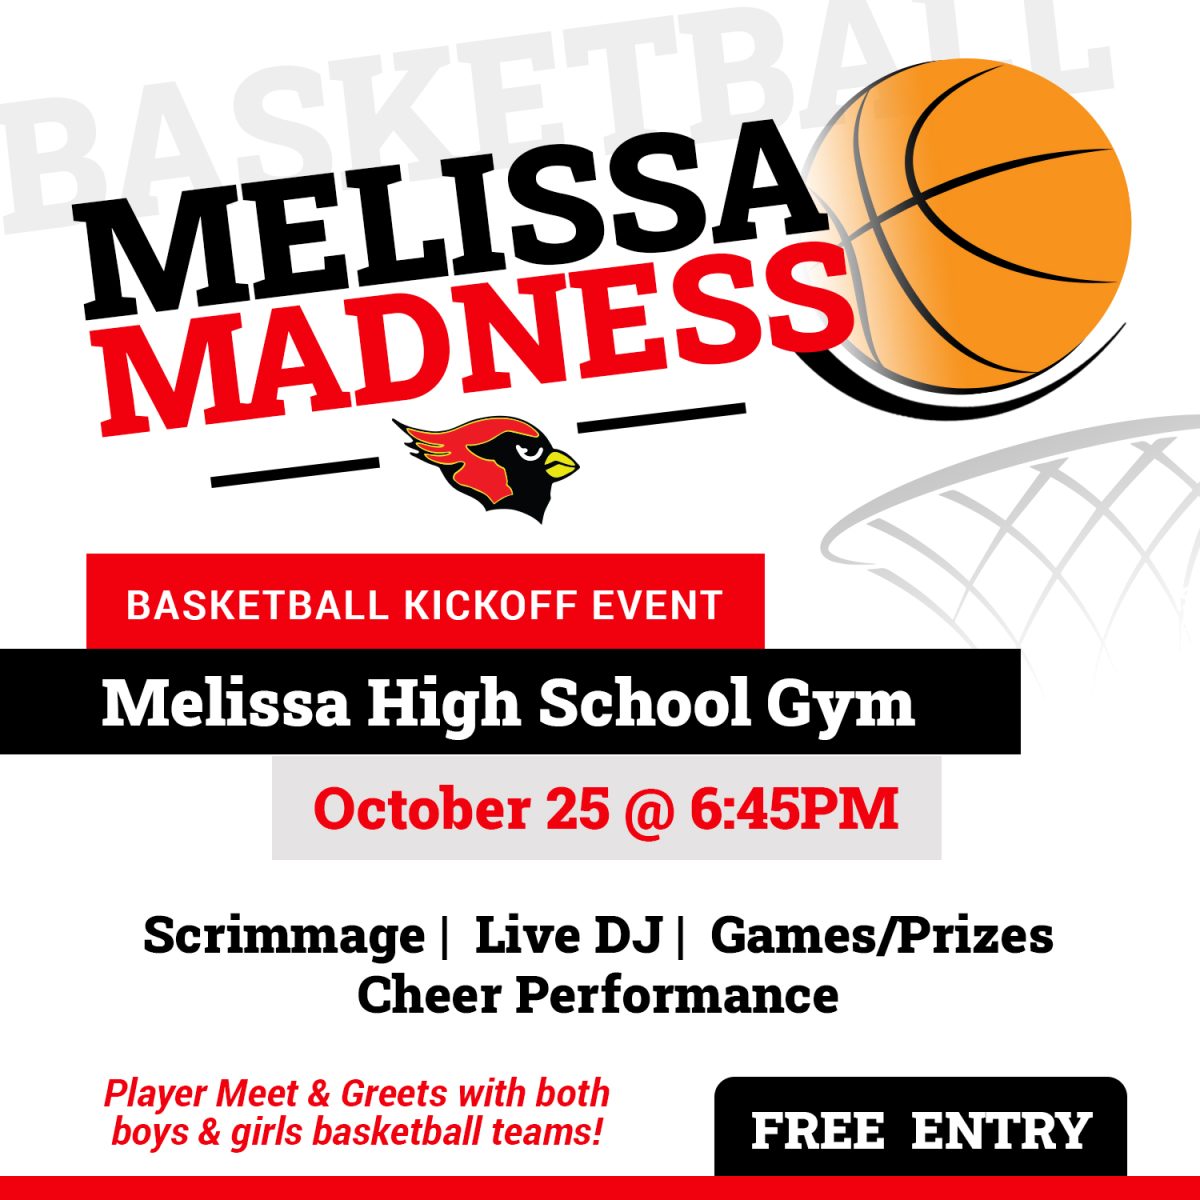 Cardinal Basketball to host Melissa Madness kickoff event Oct. 25